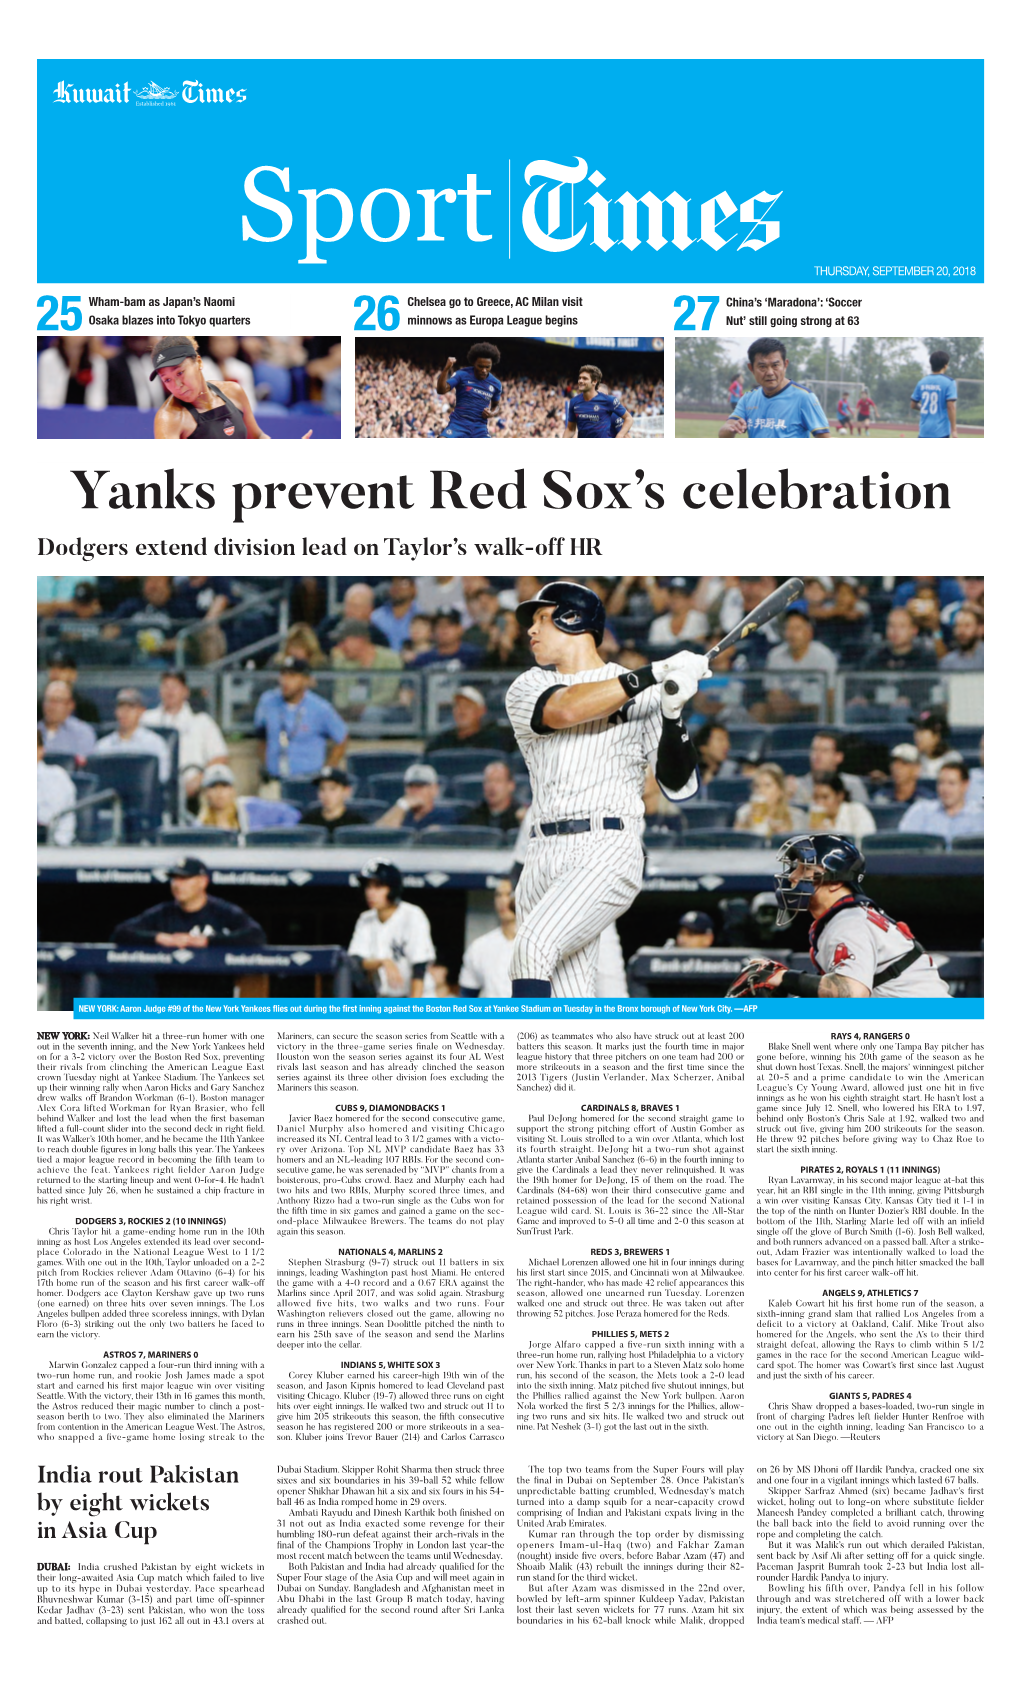 Yanks Prevent Red Sox's Celebration